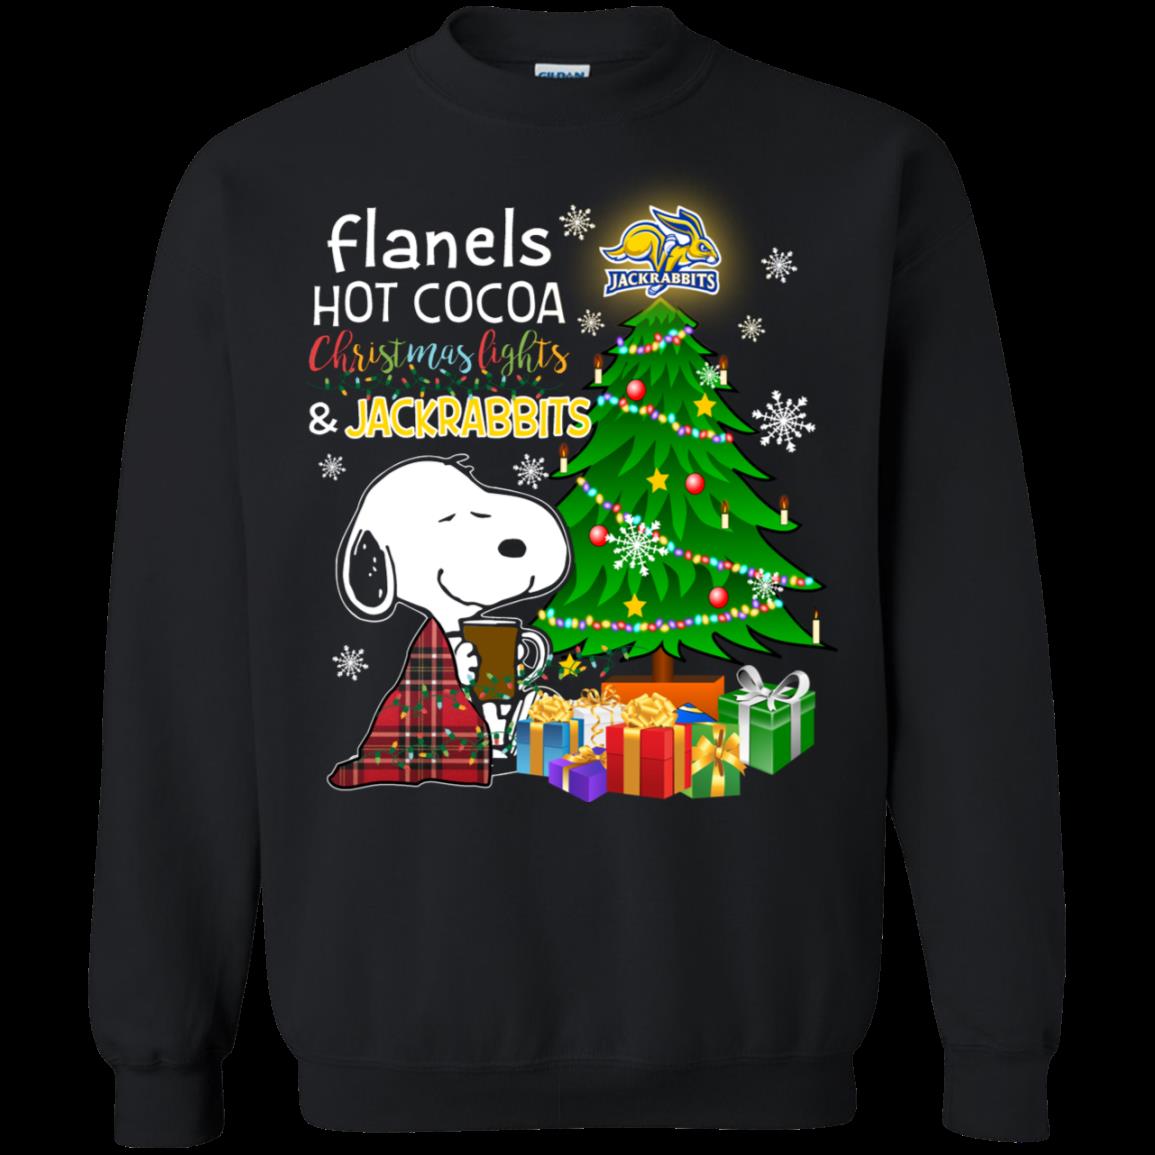 South Dakota State Jackrabbits Snoopy Ugly Christmas Sweater Flanels Hot Cocoa